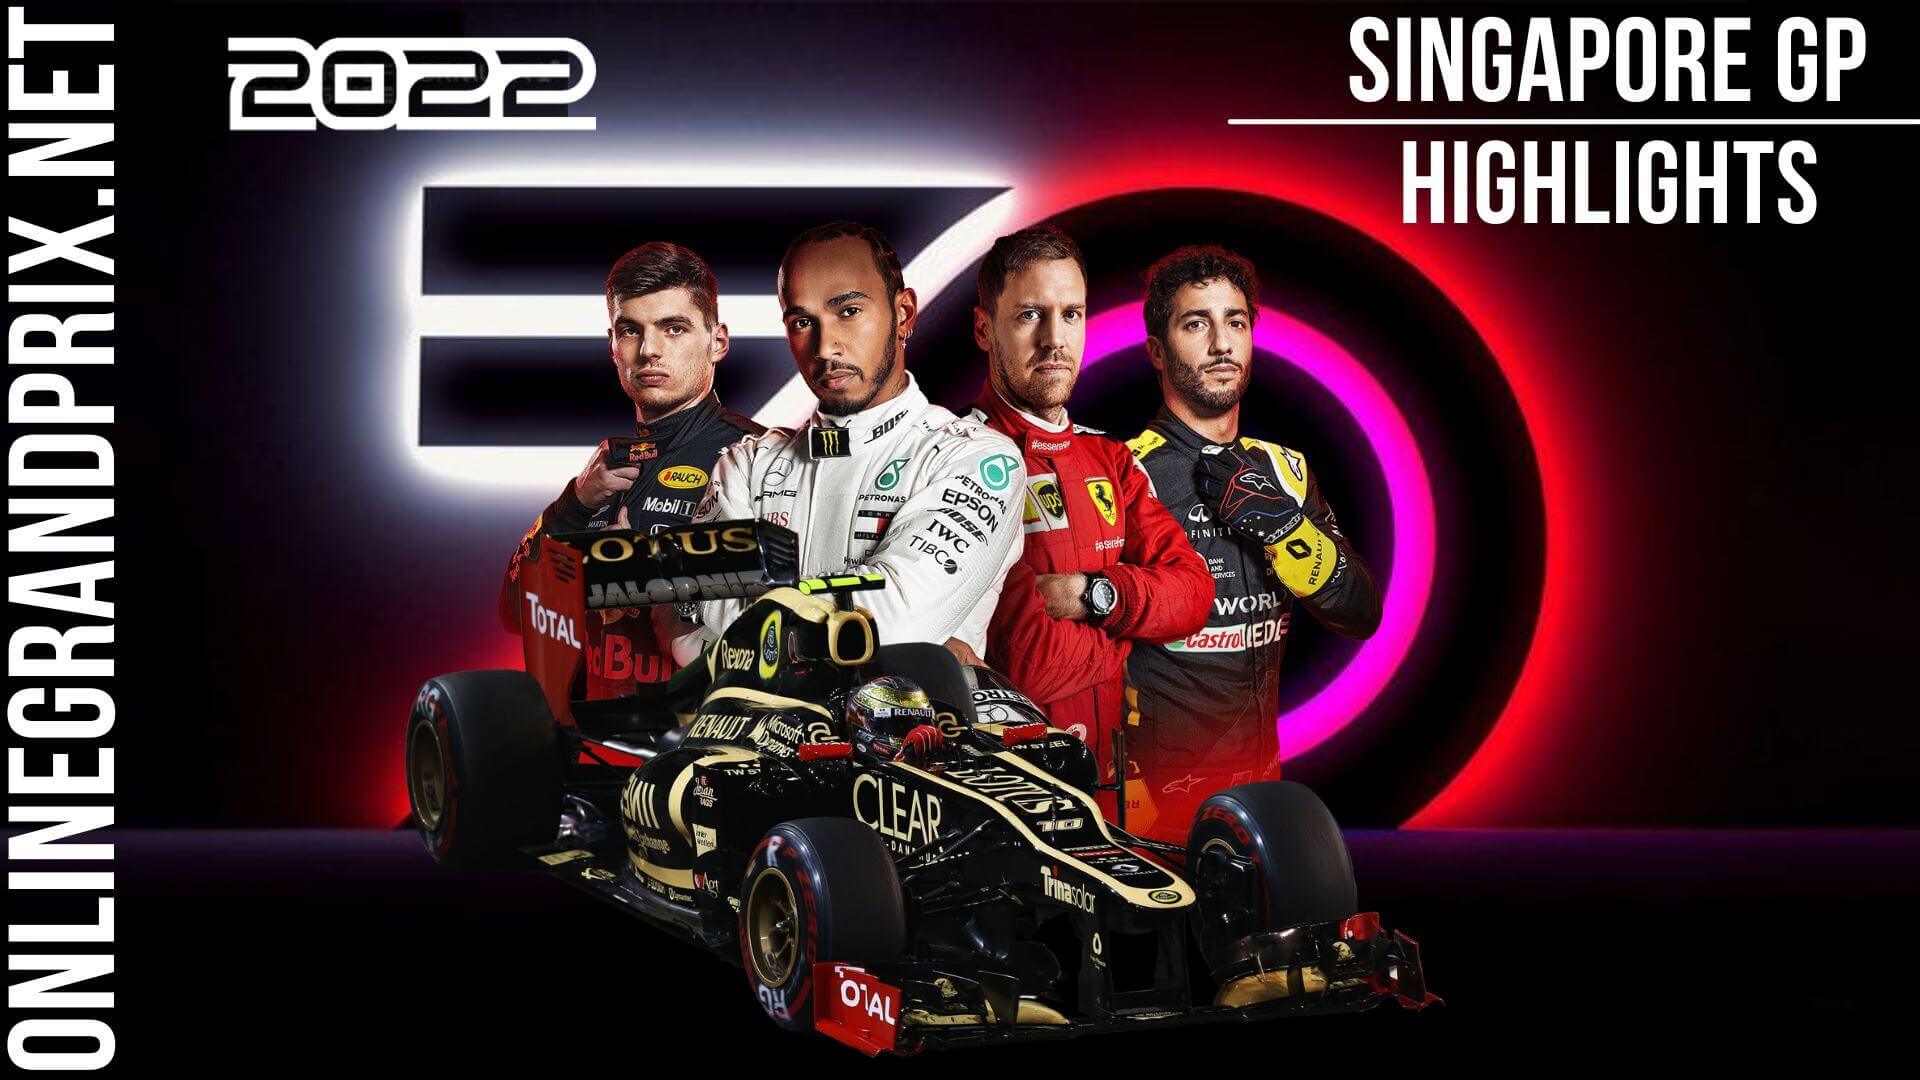 Singapore GP F1 Highlights 2022